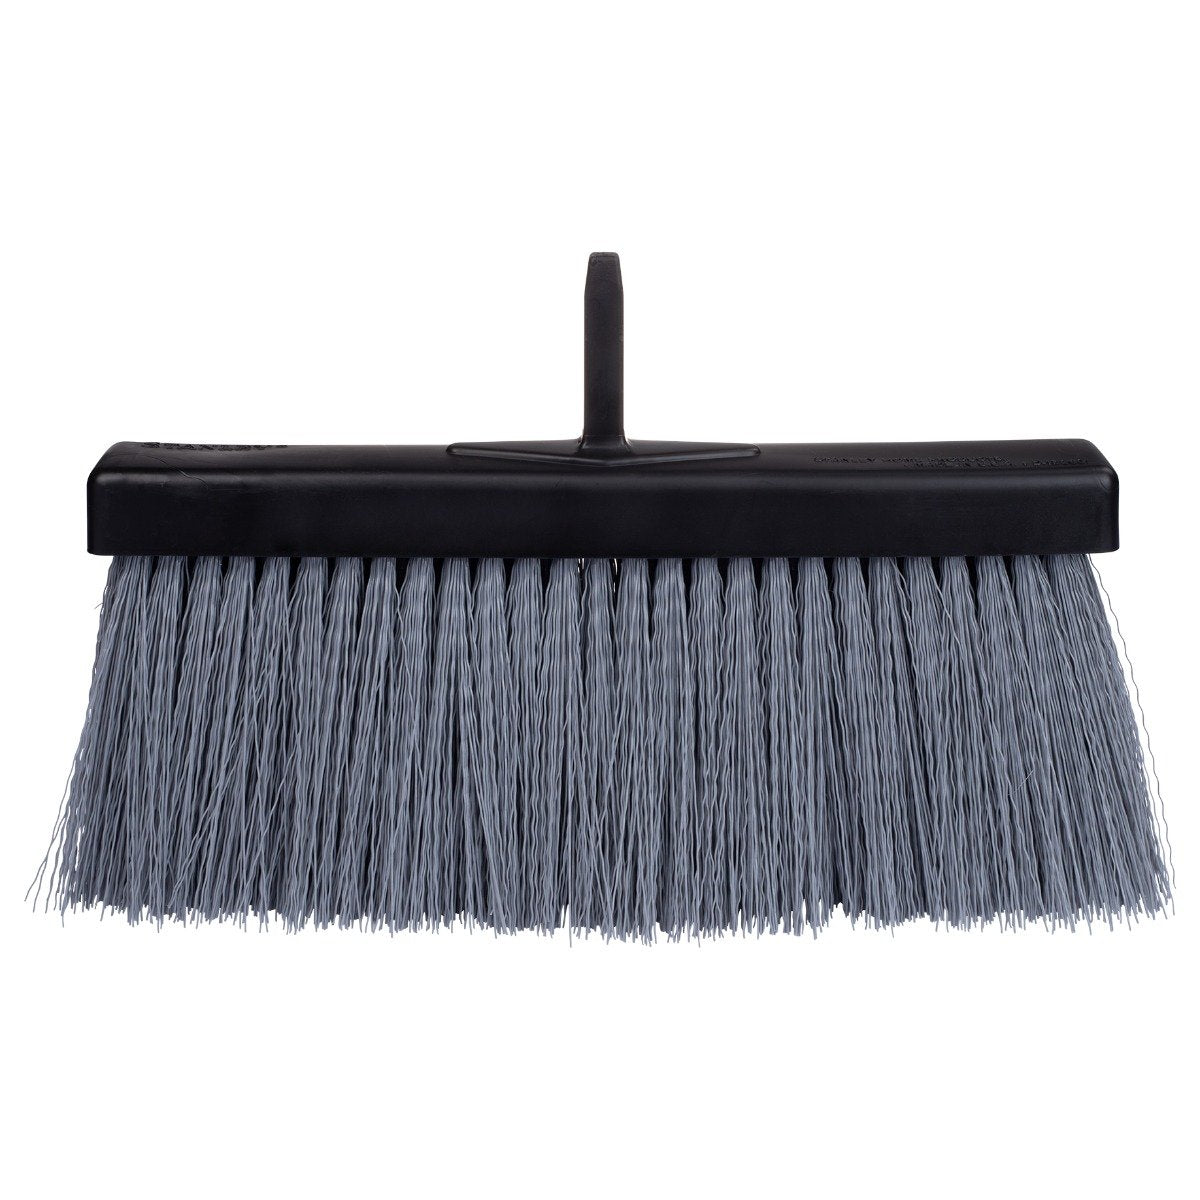 Black Slender Broom - Kitchen & Home Indoor Compact Broom-Brooms-Fuller Brush Company